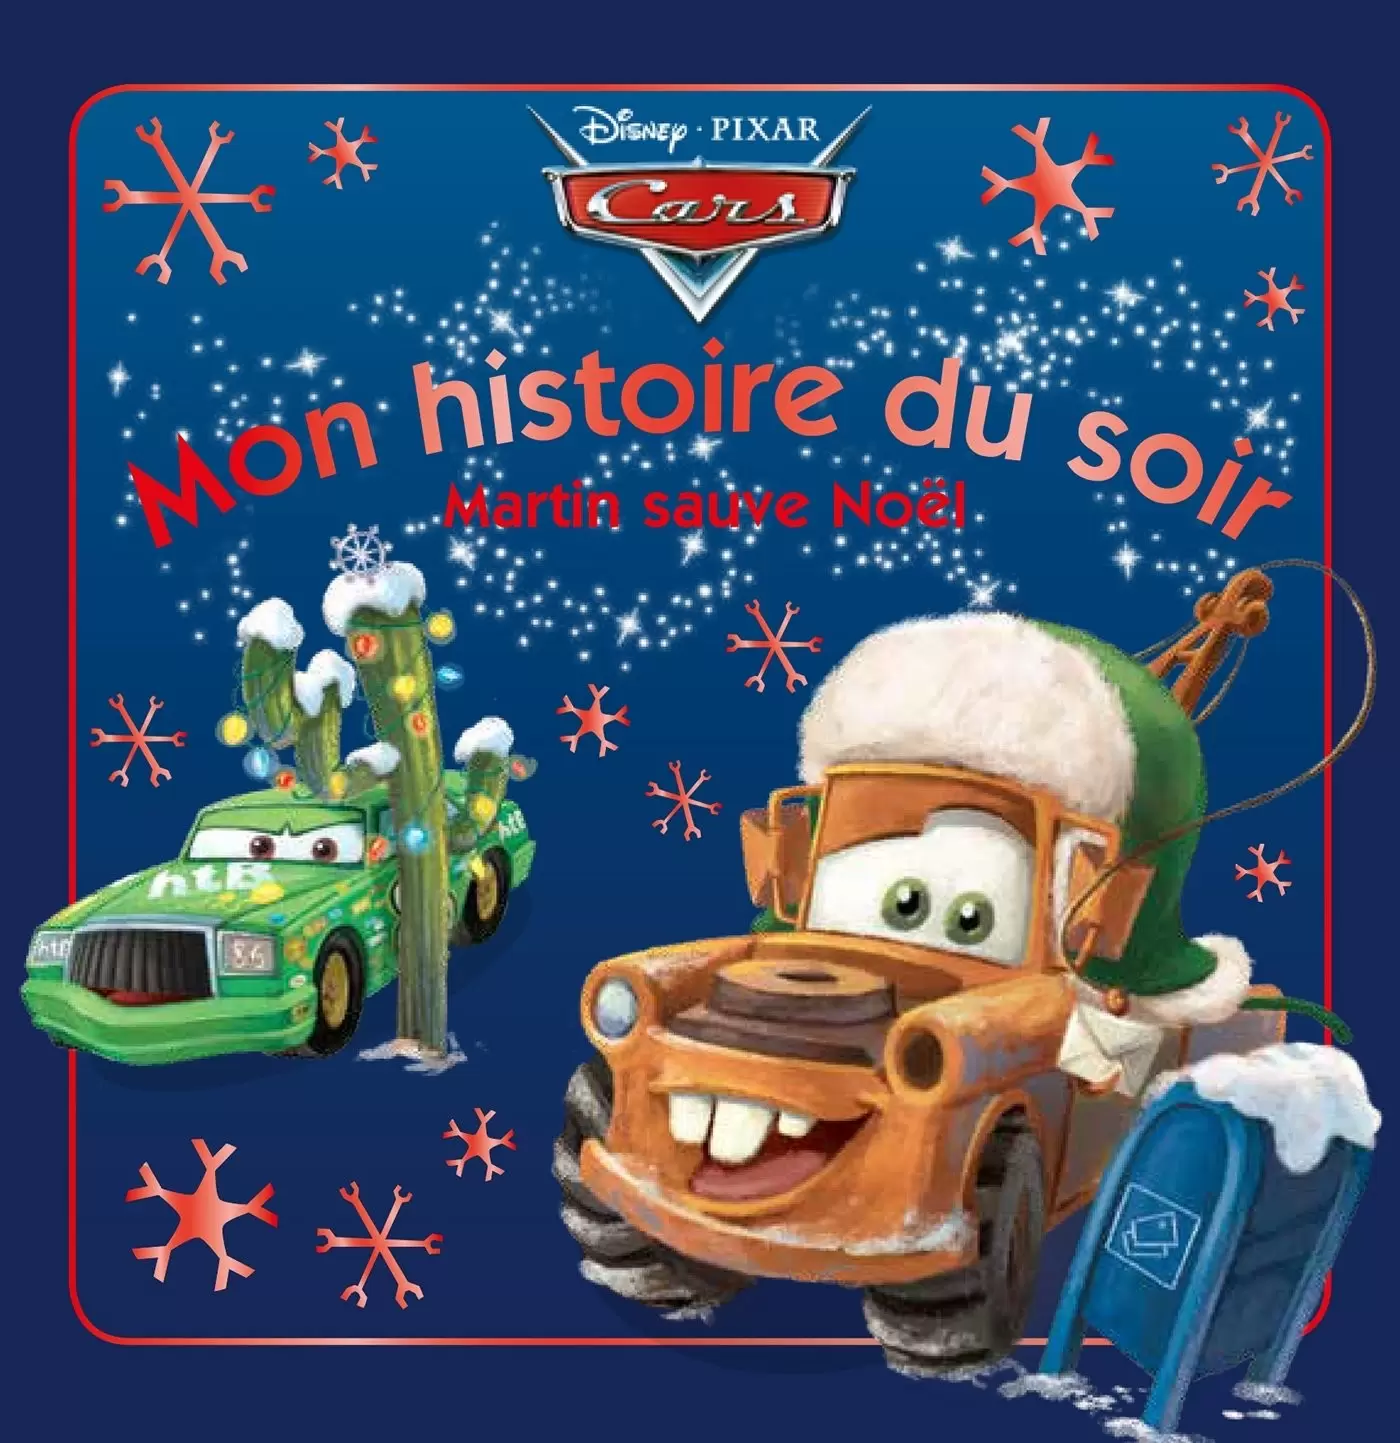 Mon histoire du soir - Cars - Martin sauve Noël